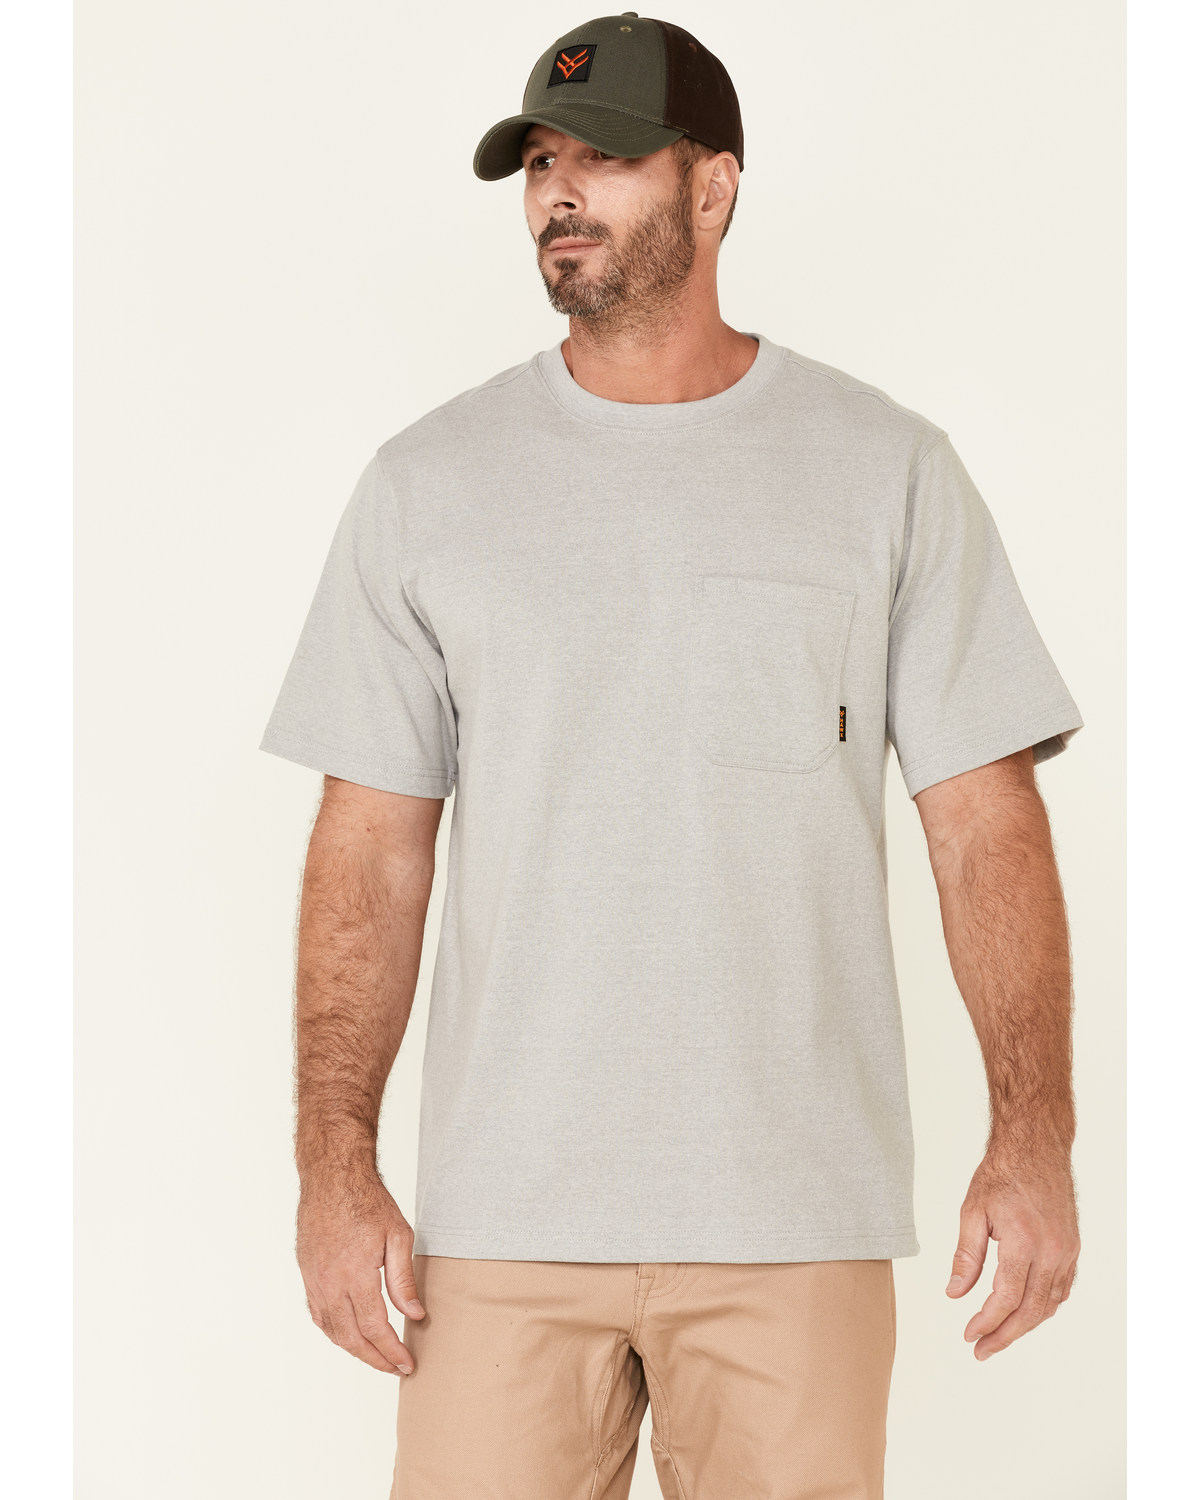 Hawx Men's Solid Light Gray Forge Short Sleeve Work Pocket T-Shirt